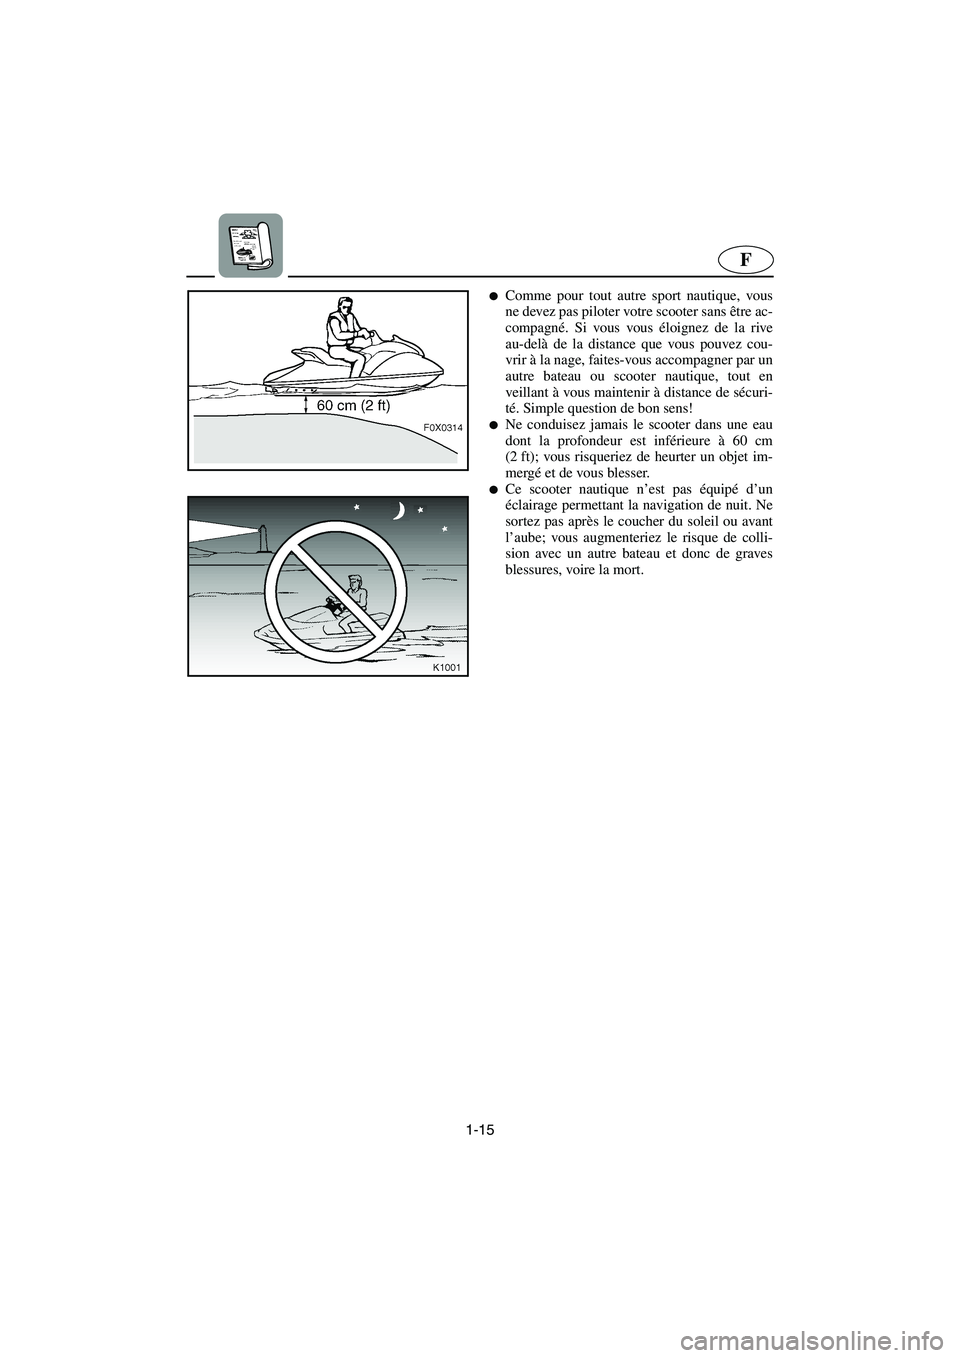 YAMAHA GP800R 2003  Manuale de Empleo (in Spanish) 1-15
F
Comme pour tout autre sport nautique, vous
ne devez pas piloter votre scooter sans être ac-
compagné. Si vous vous éloignez de la rive
au-delà de la distance que vous pouvez cou-
vrir à l